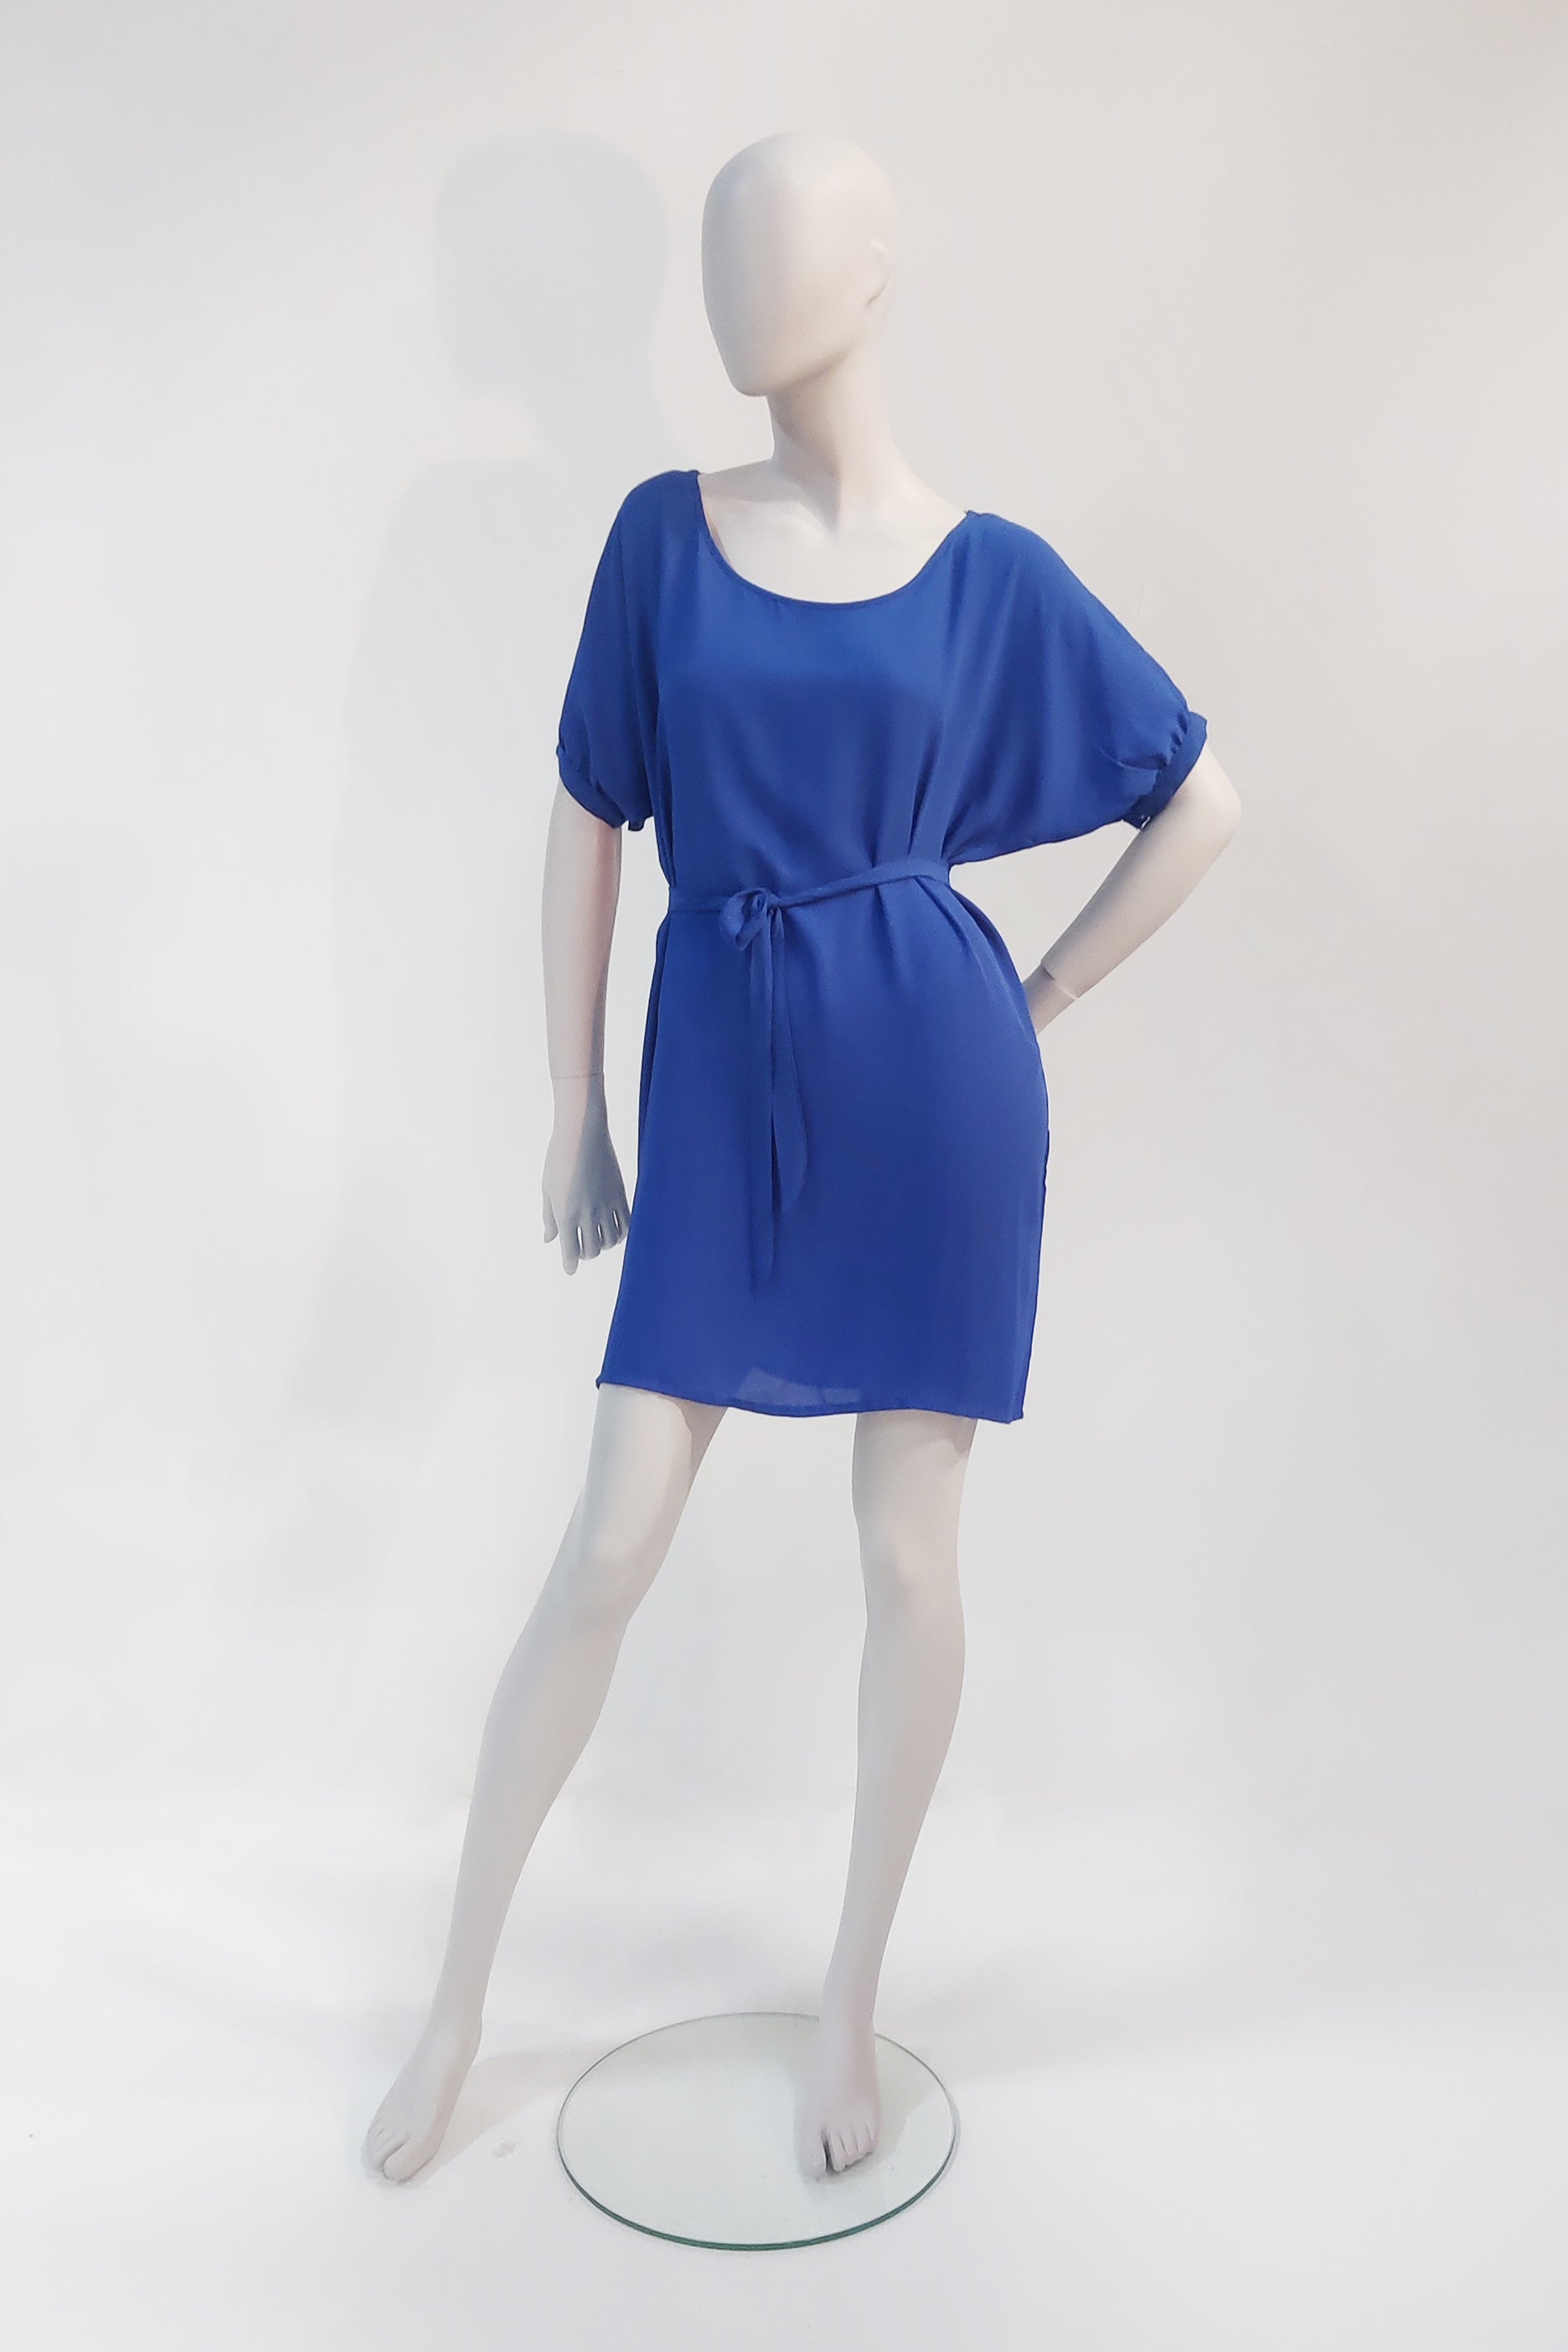 Belted Blue Dress (S/M)